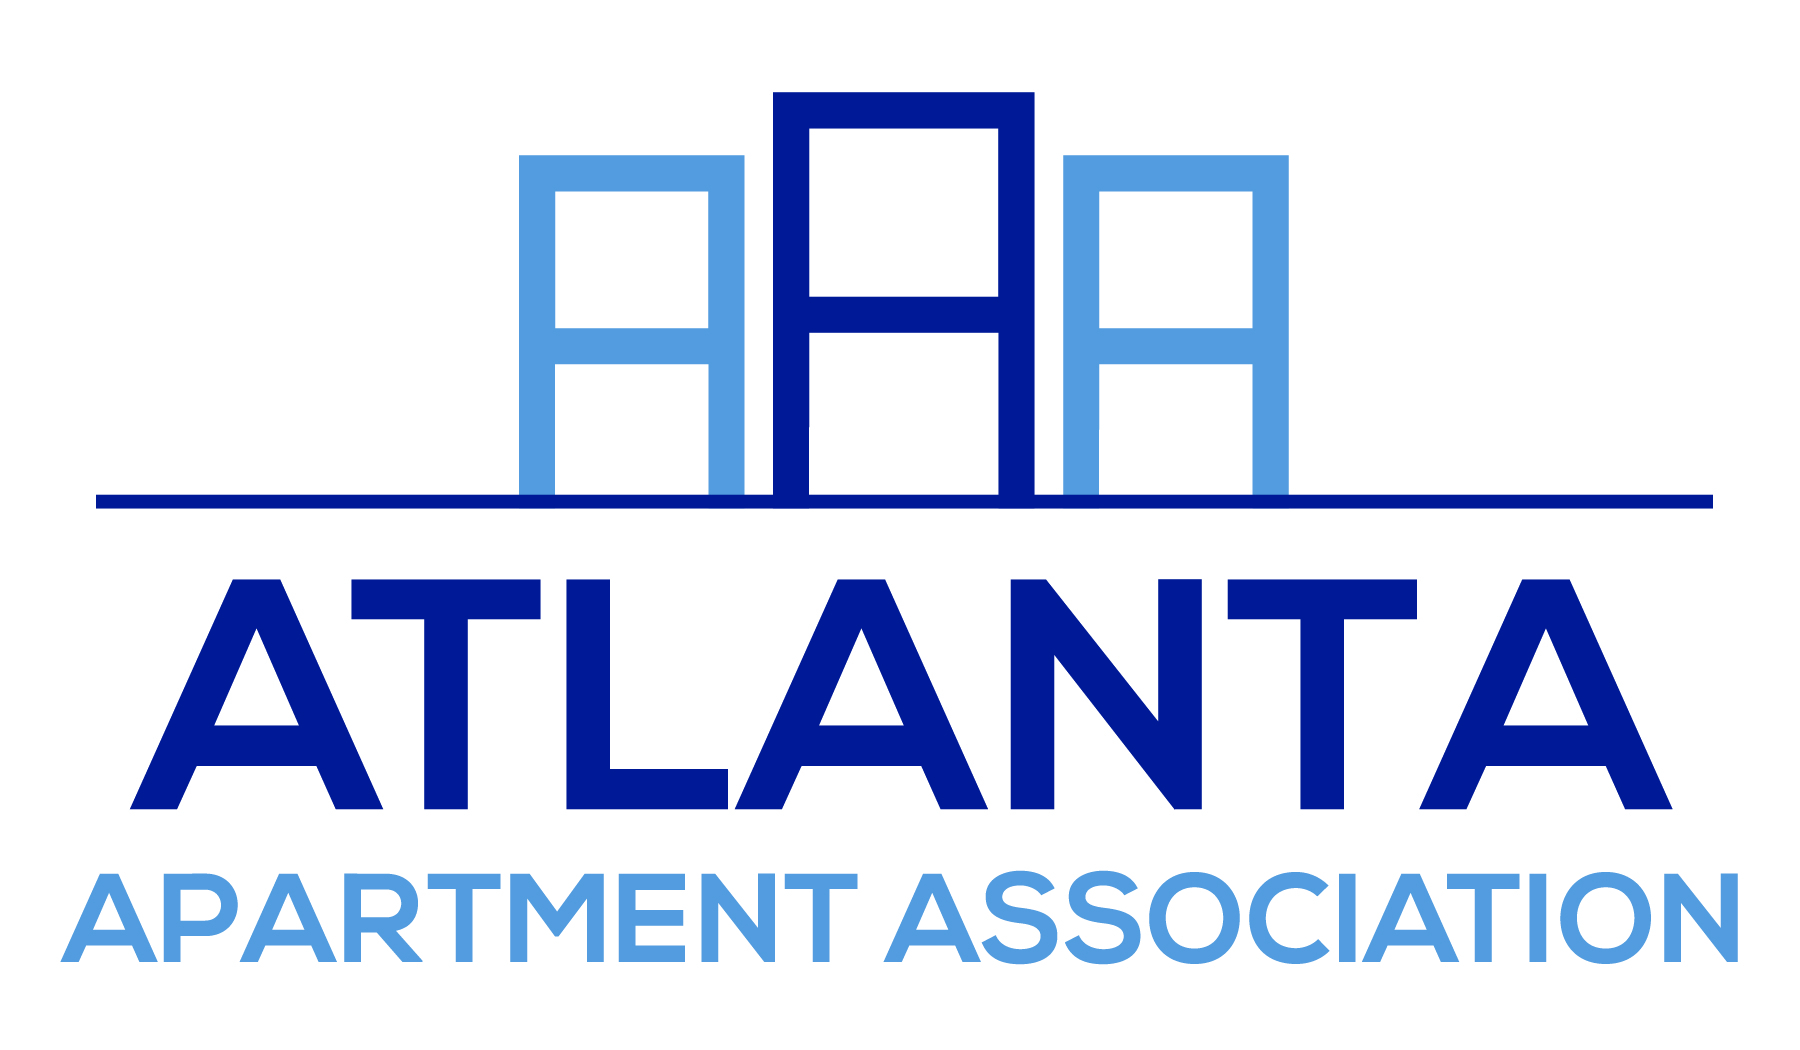 Georgia Apartment Association Lease Agreement Aaa Logo Download Atlanta Apartment Association